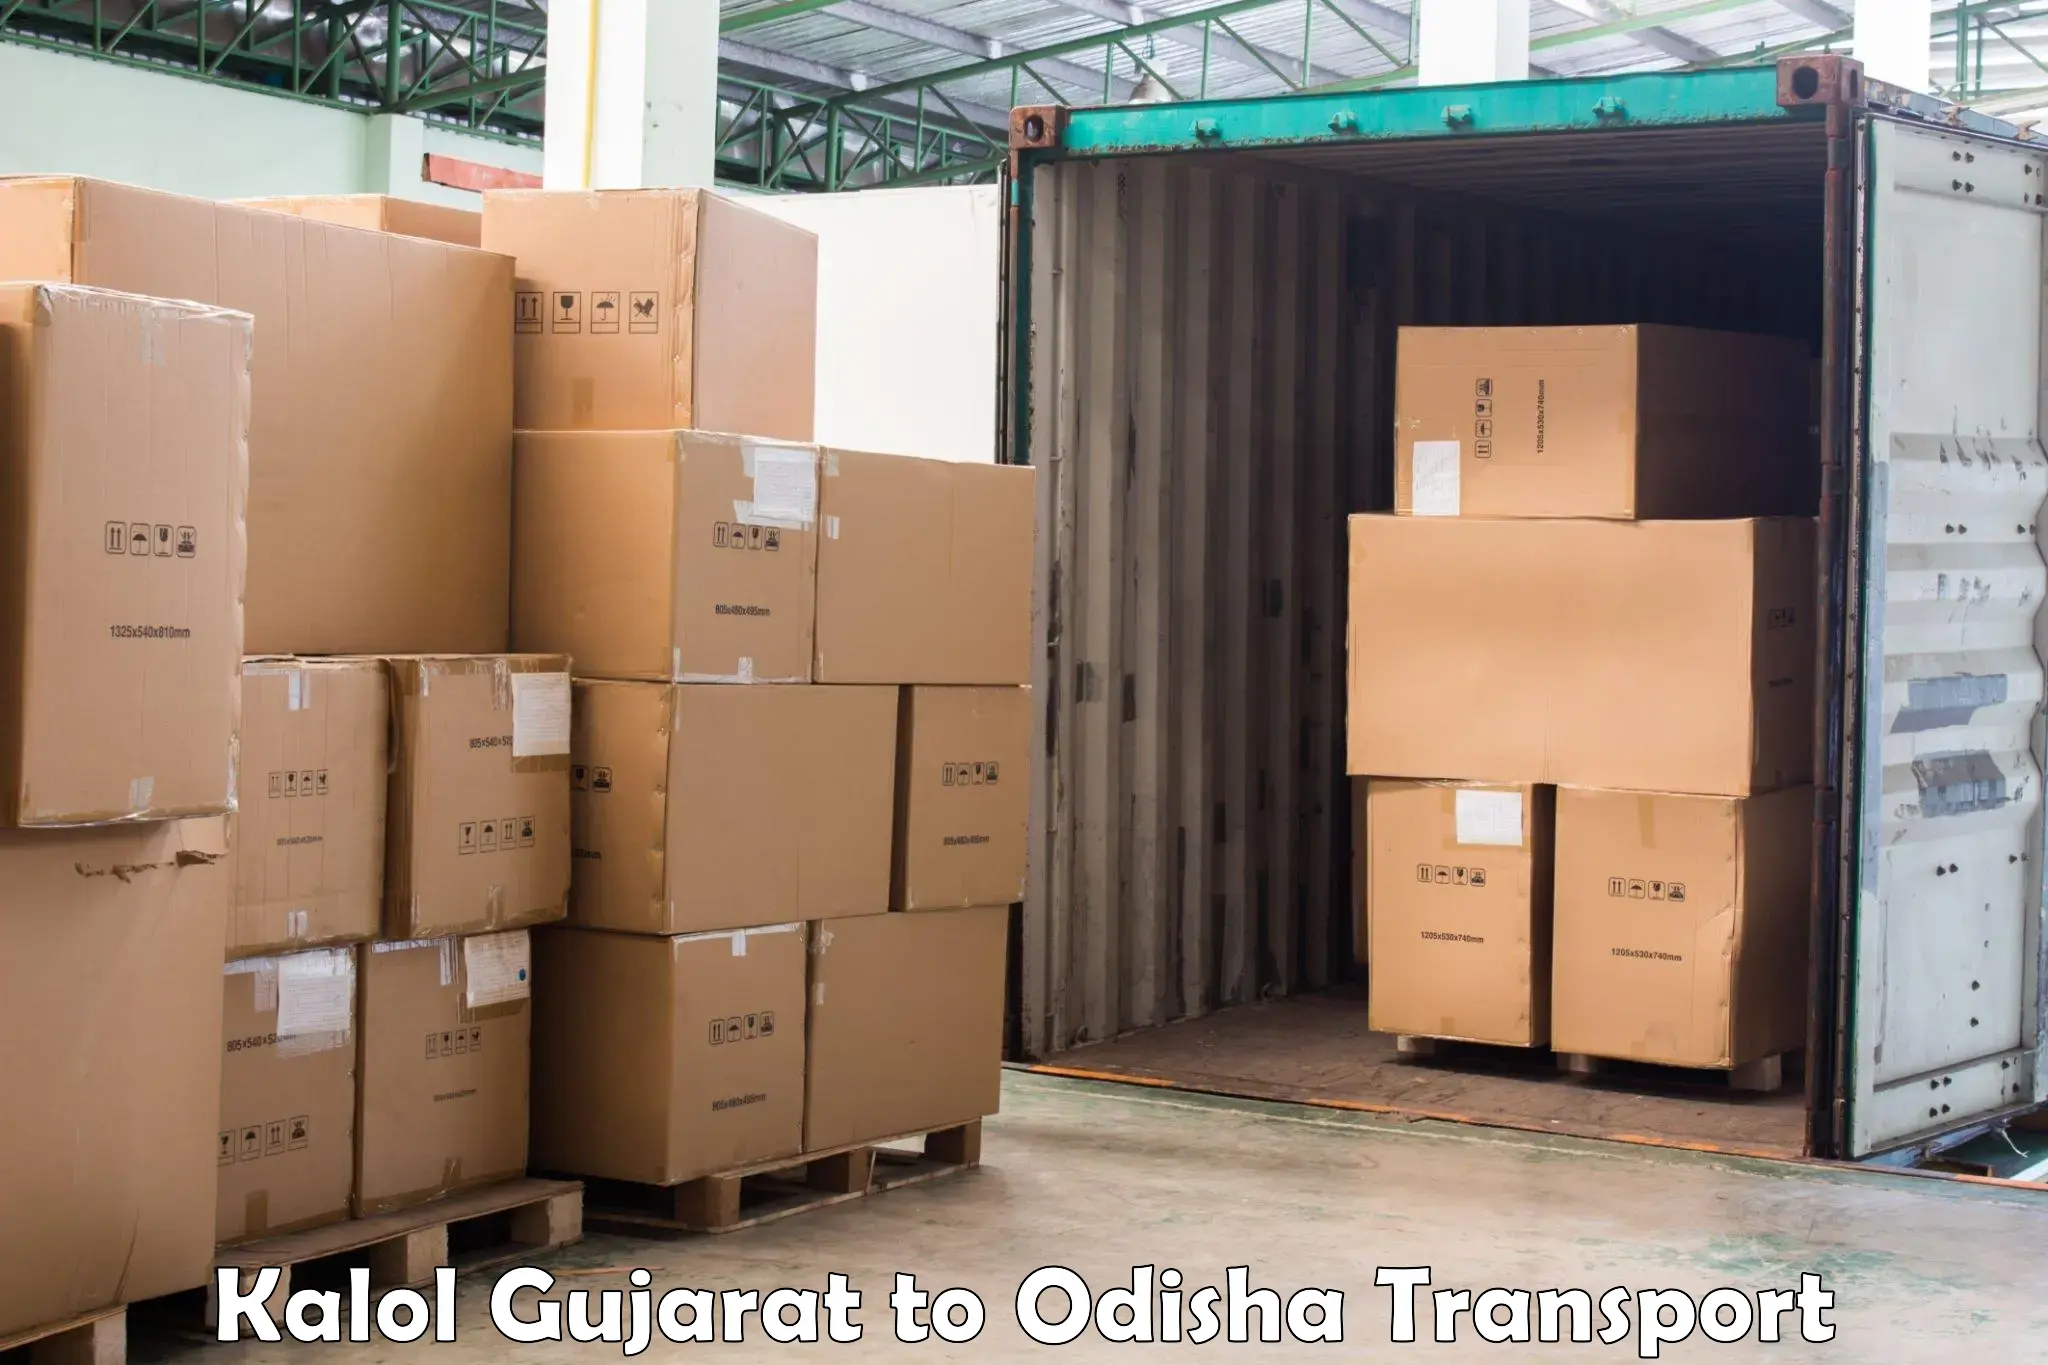 Part load transport service in India Kalol Gujarat to Odisha